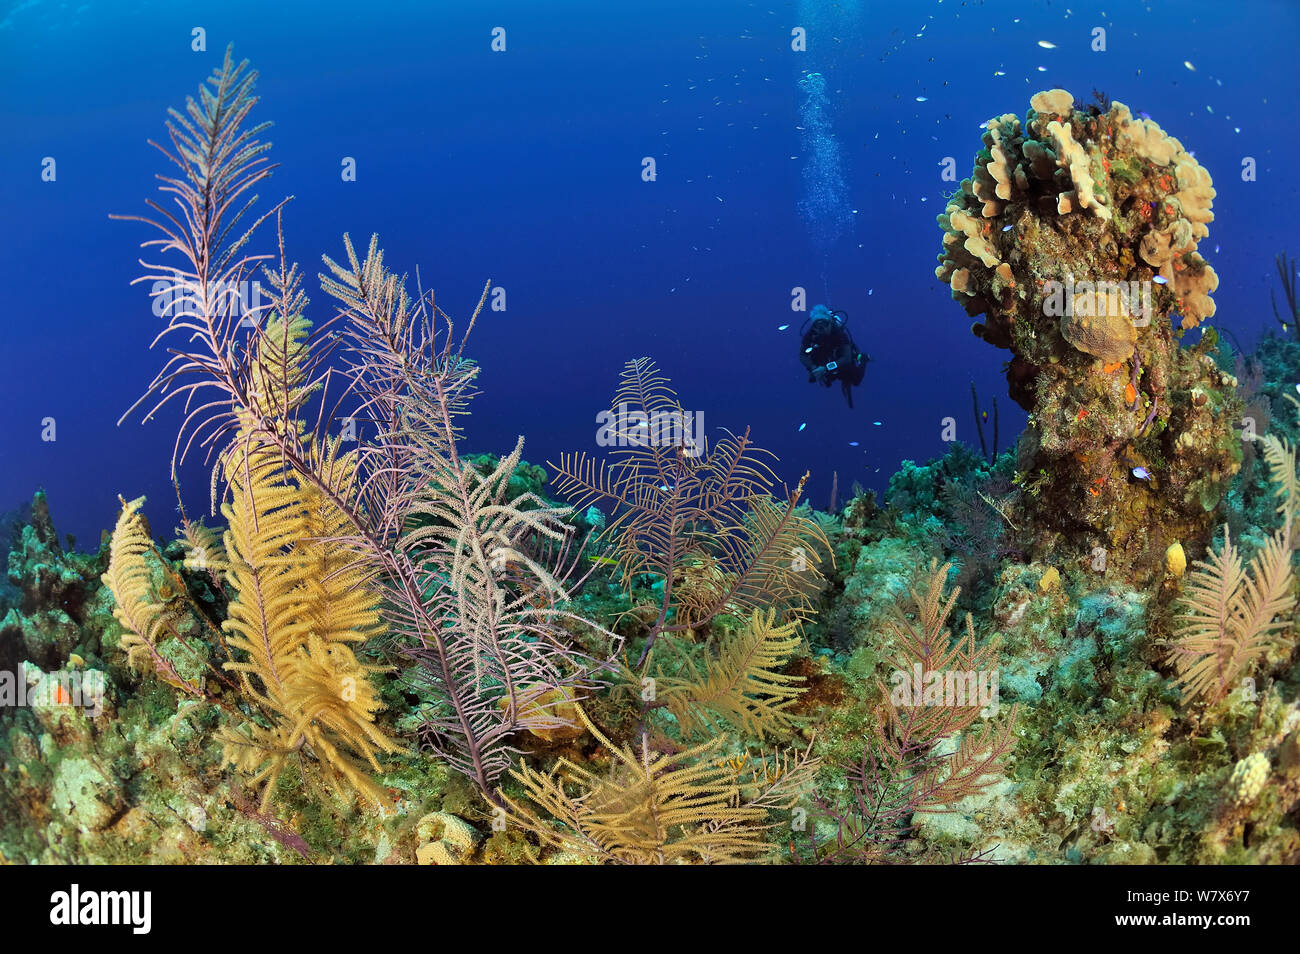 Diver on coral reef with Bipinnate sea plumes (Pseudopterogorgia bipinnata), other Sea plumes (Pseudopterogorgia ) and corals, San Salvador Island / Colombus Island, Bahamas. Caribbean. June 2013. Stock Photo